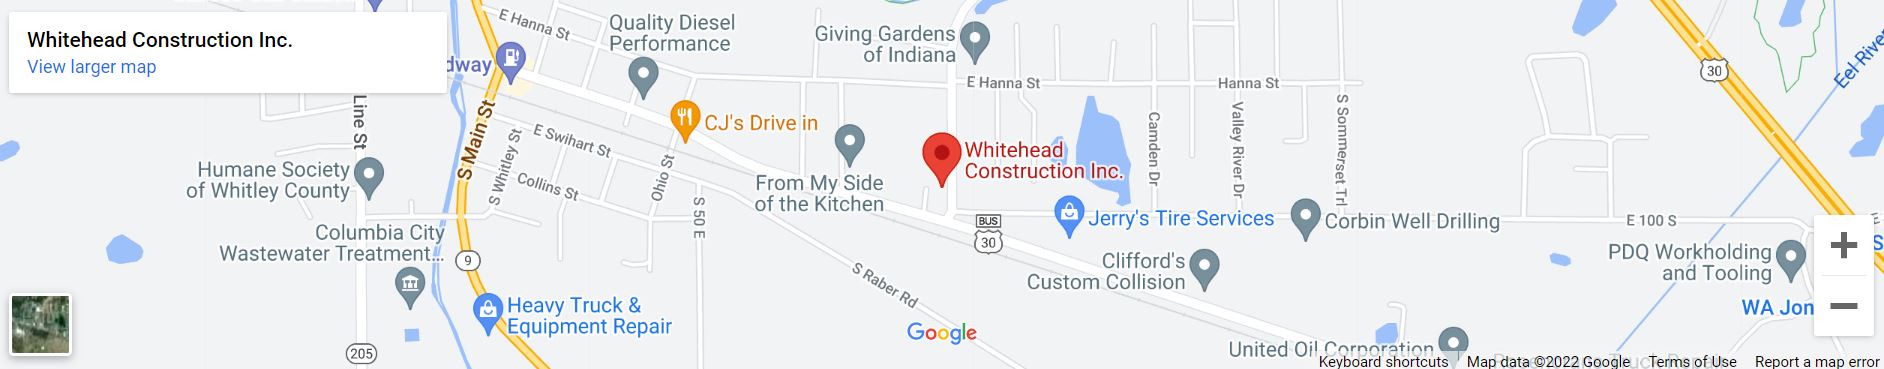 Whitehead Construction Inc. - Map